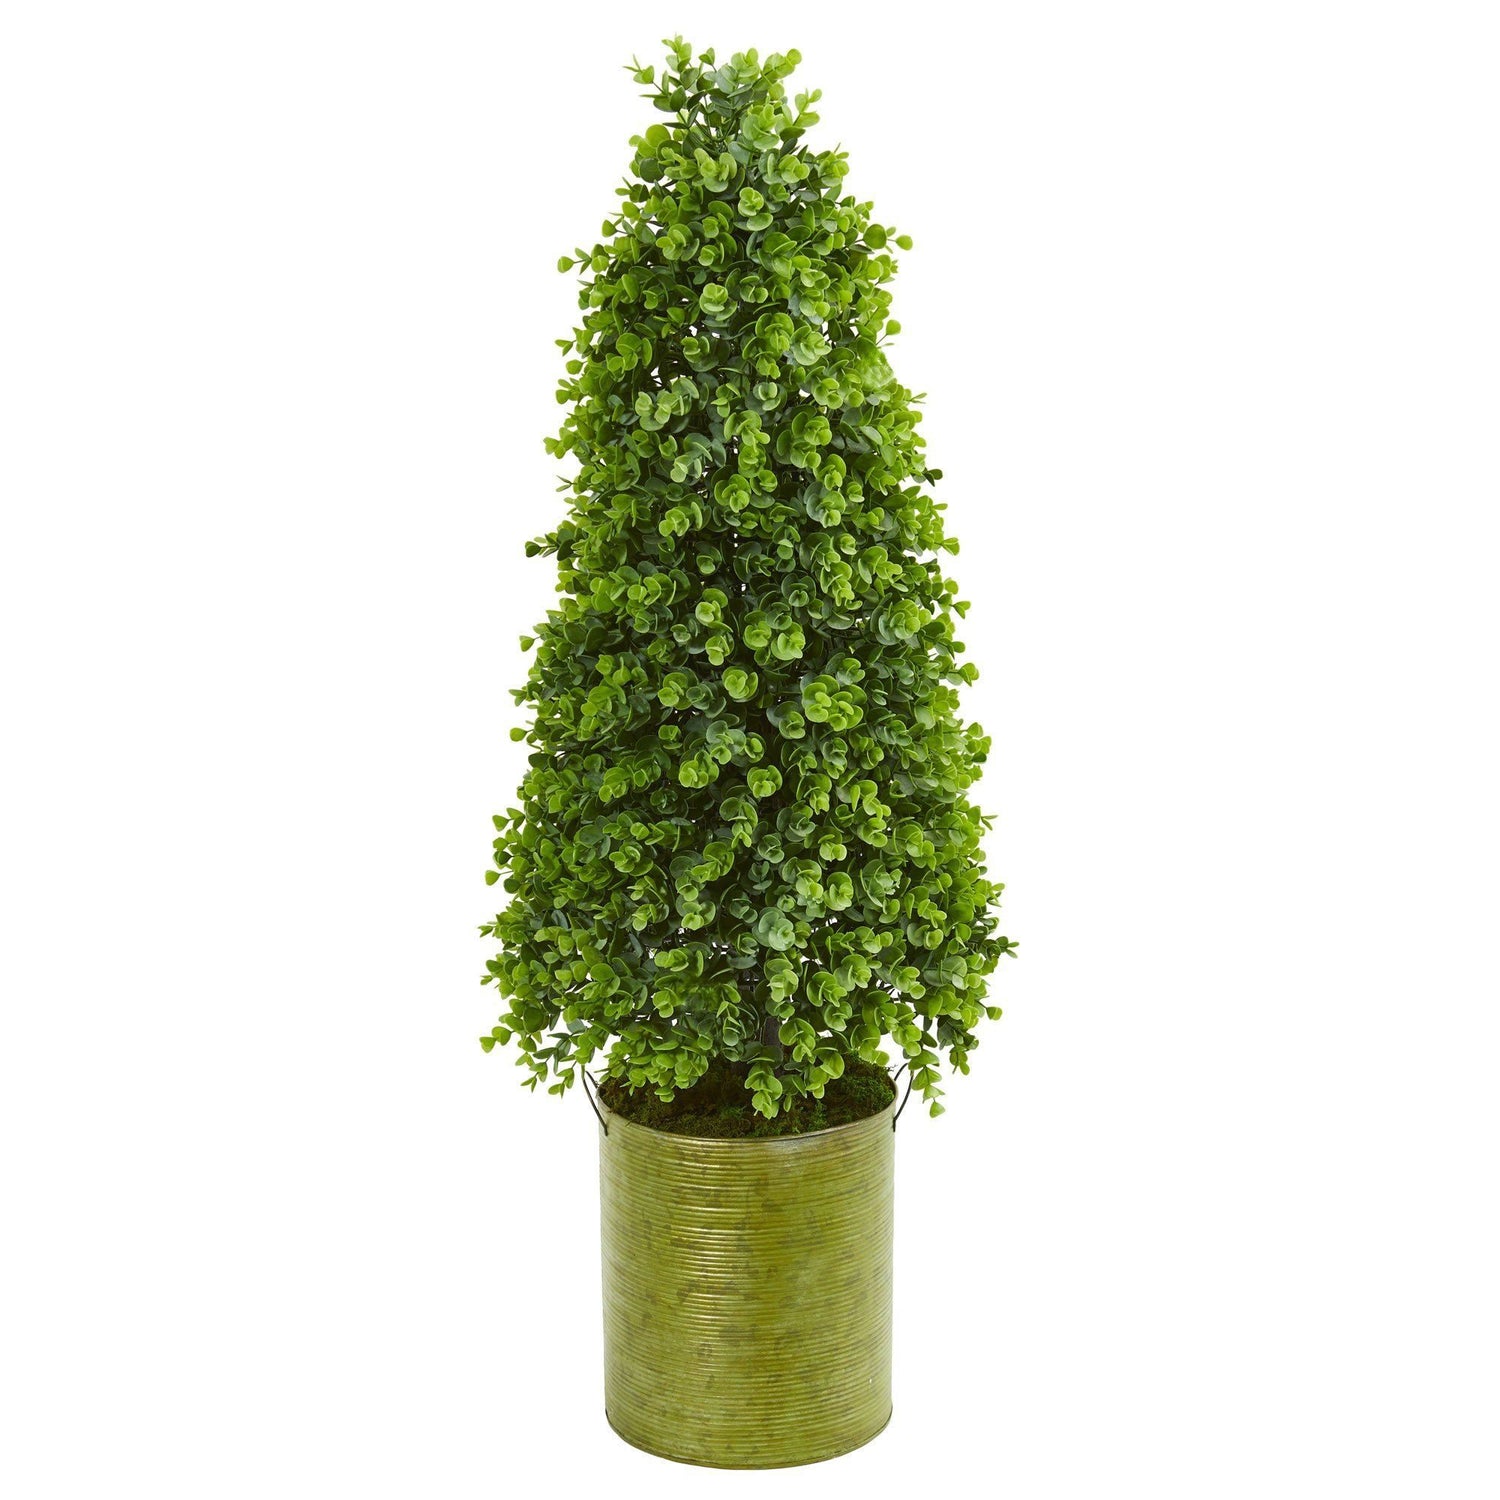 41” Artificial Eucalyptus Cone Topiary Tree in Metal Planter (Indoor/Outdoor)